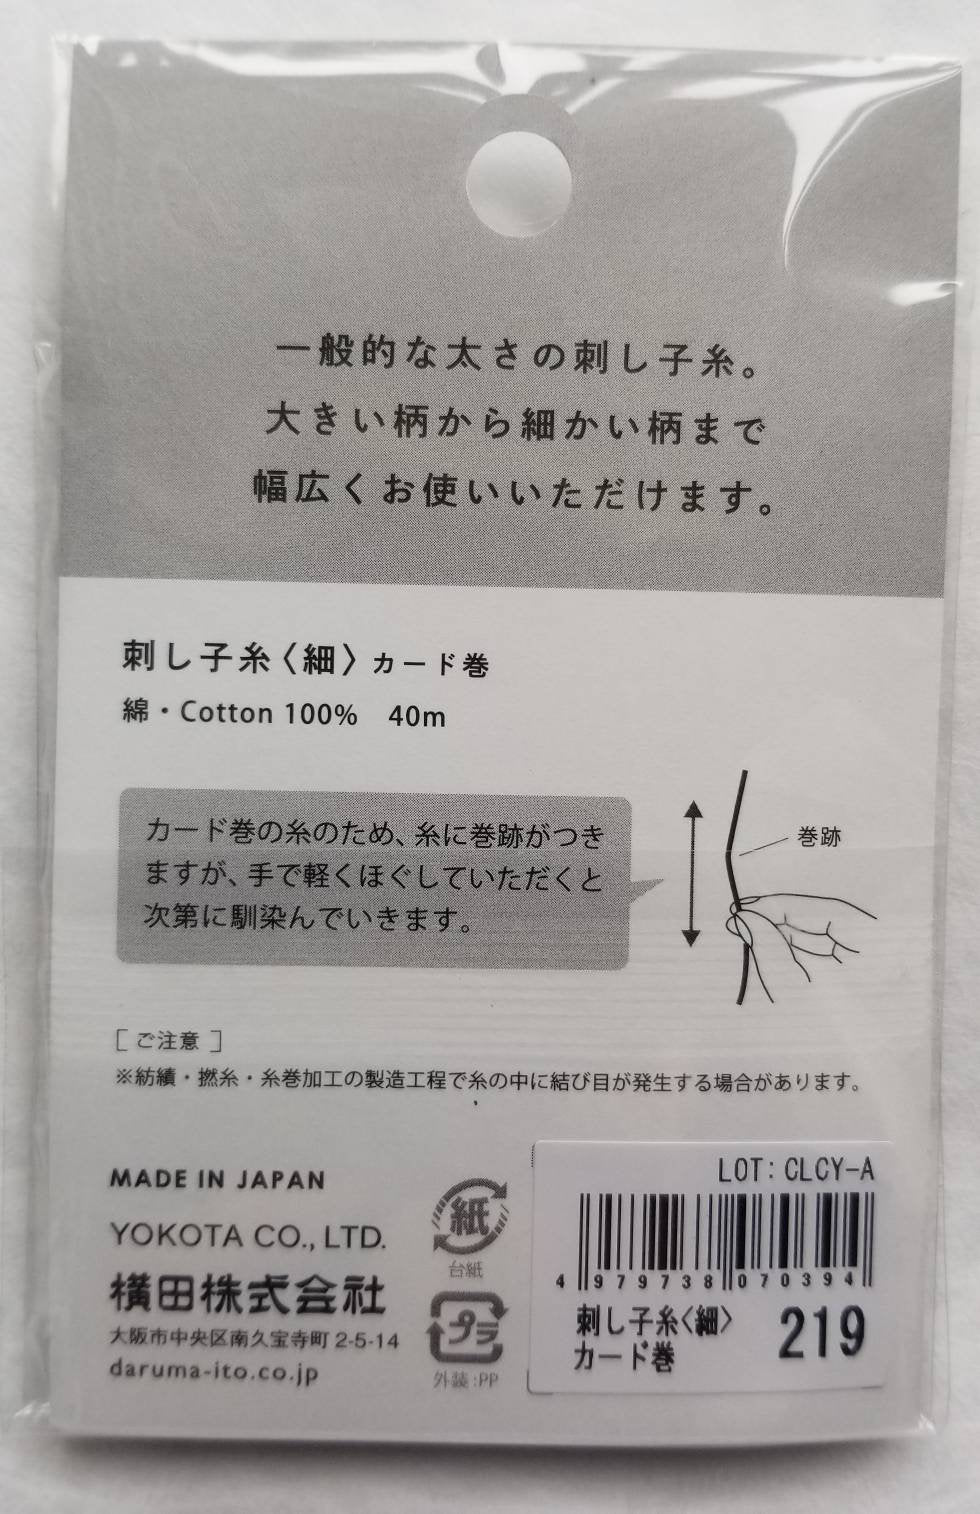 Daruma #219 BLACK Japanese Cotton SASHIKO thread 40 meter skein 20/4